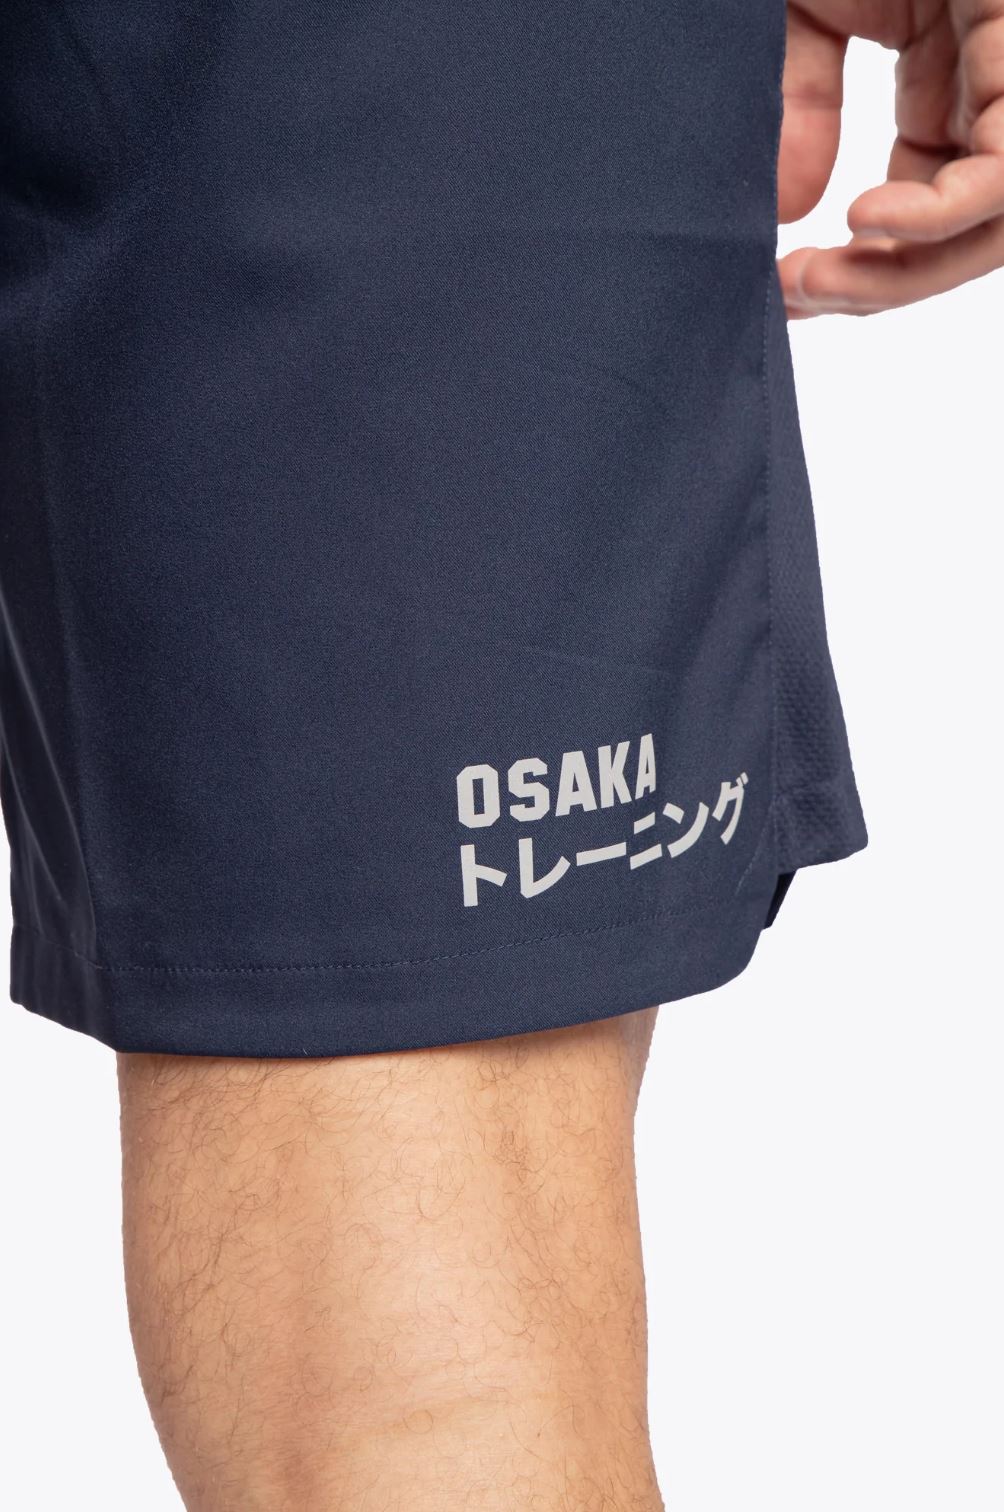 Osaka Men's Training Short (Navy)